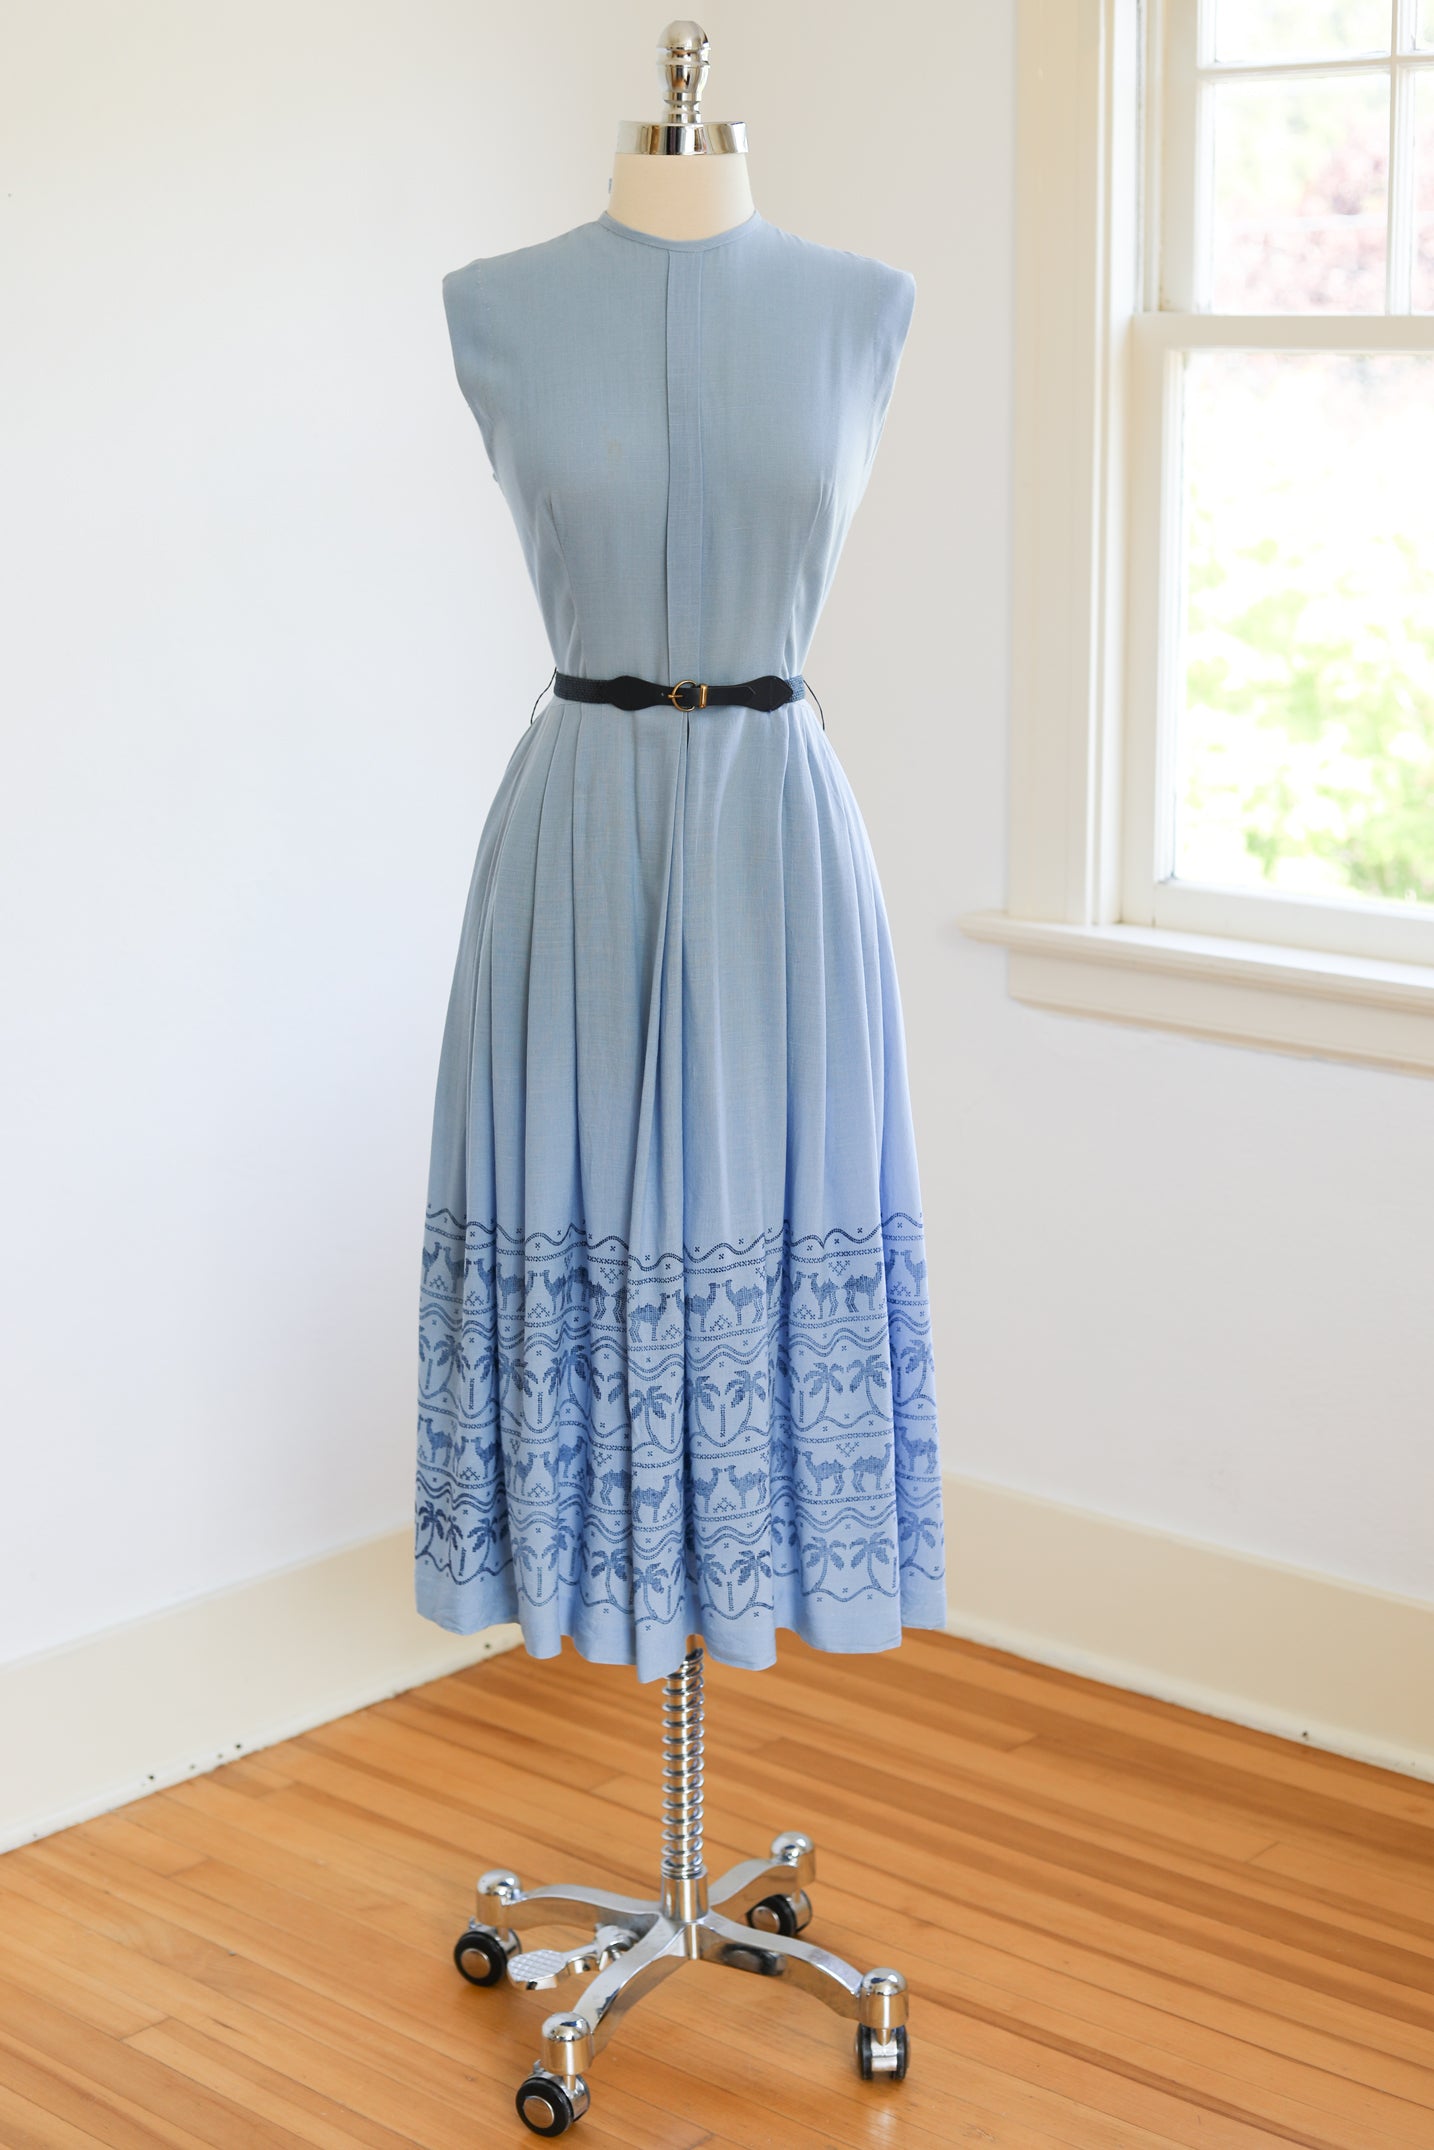 Vintage 1940s Dress - SWEET + COMFY Delphite Blue Butcher Linen Sundress w Camel + Palm Tree Border Print Size M